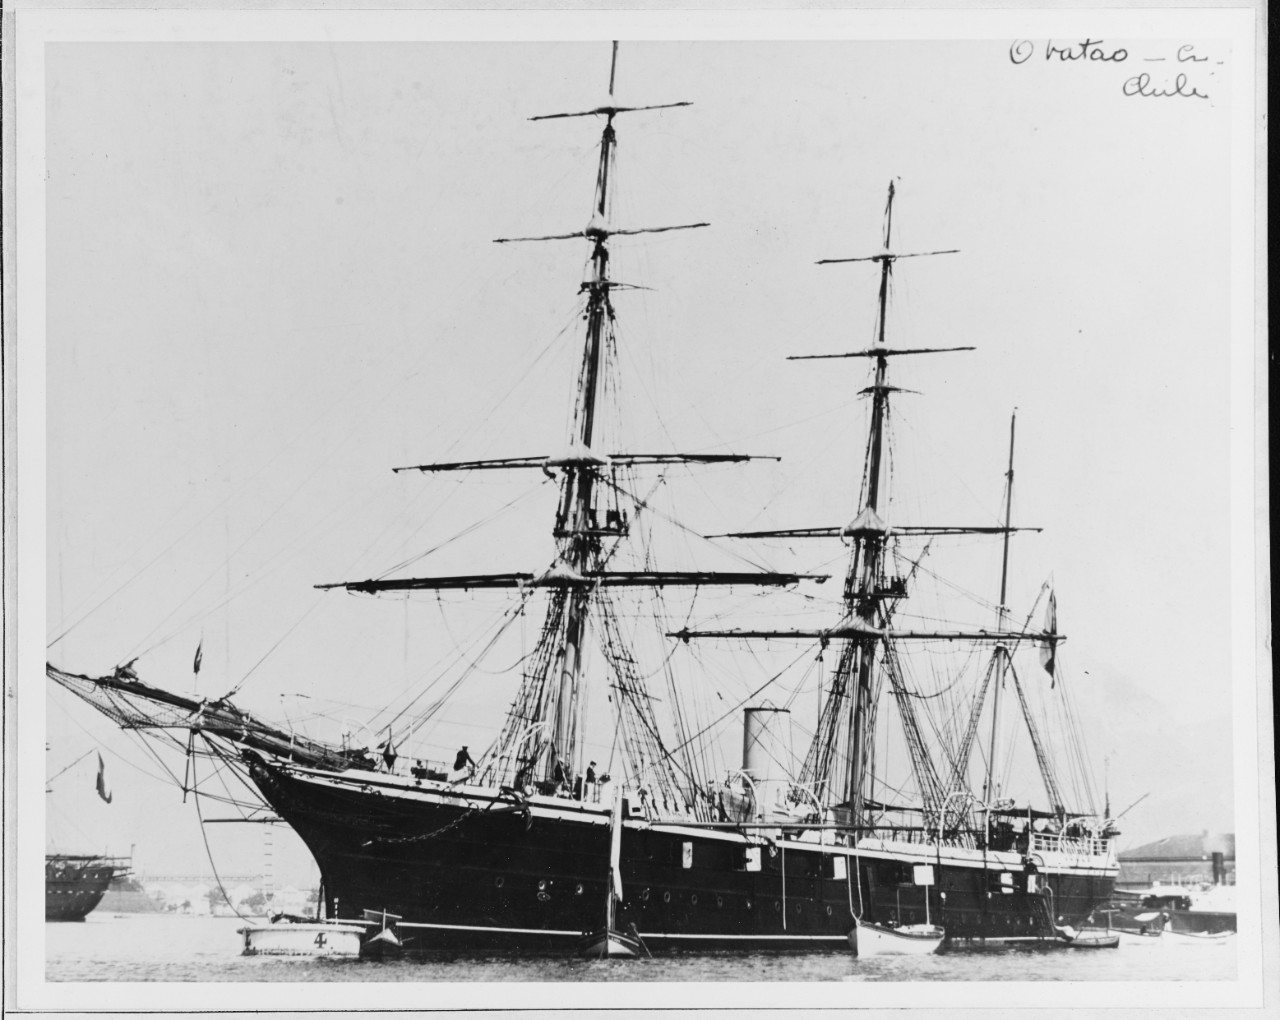 ABTAO (Chilean Corvette, 1864)